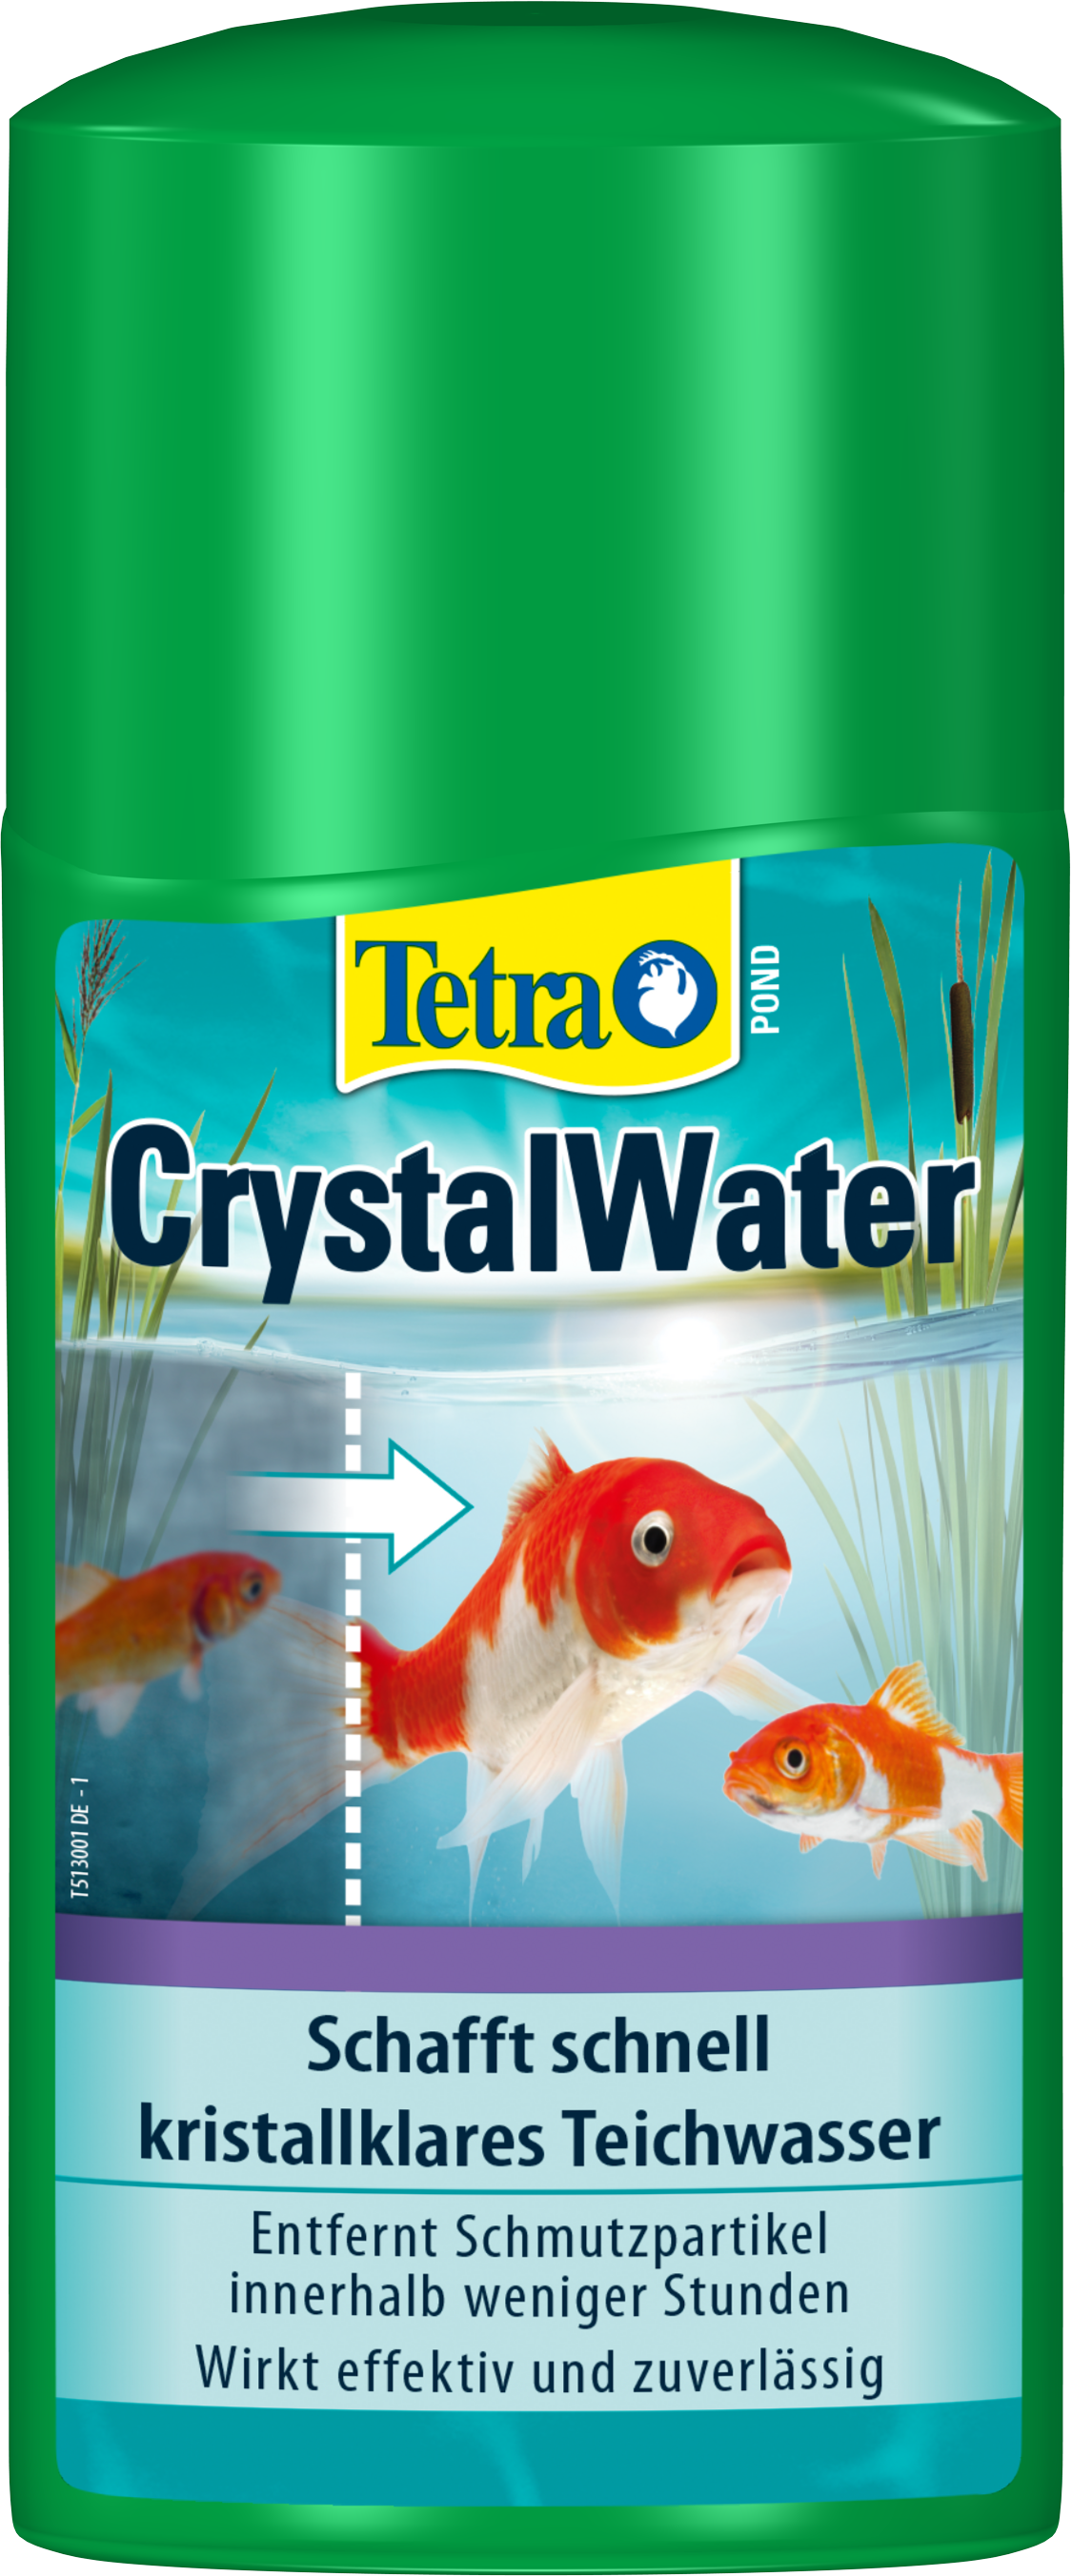 Tetra Pond CrystalWater: Tetra